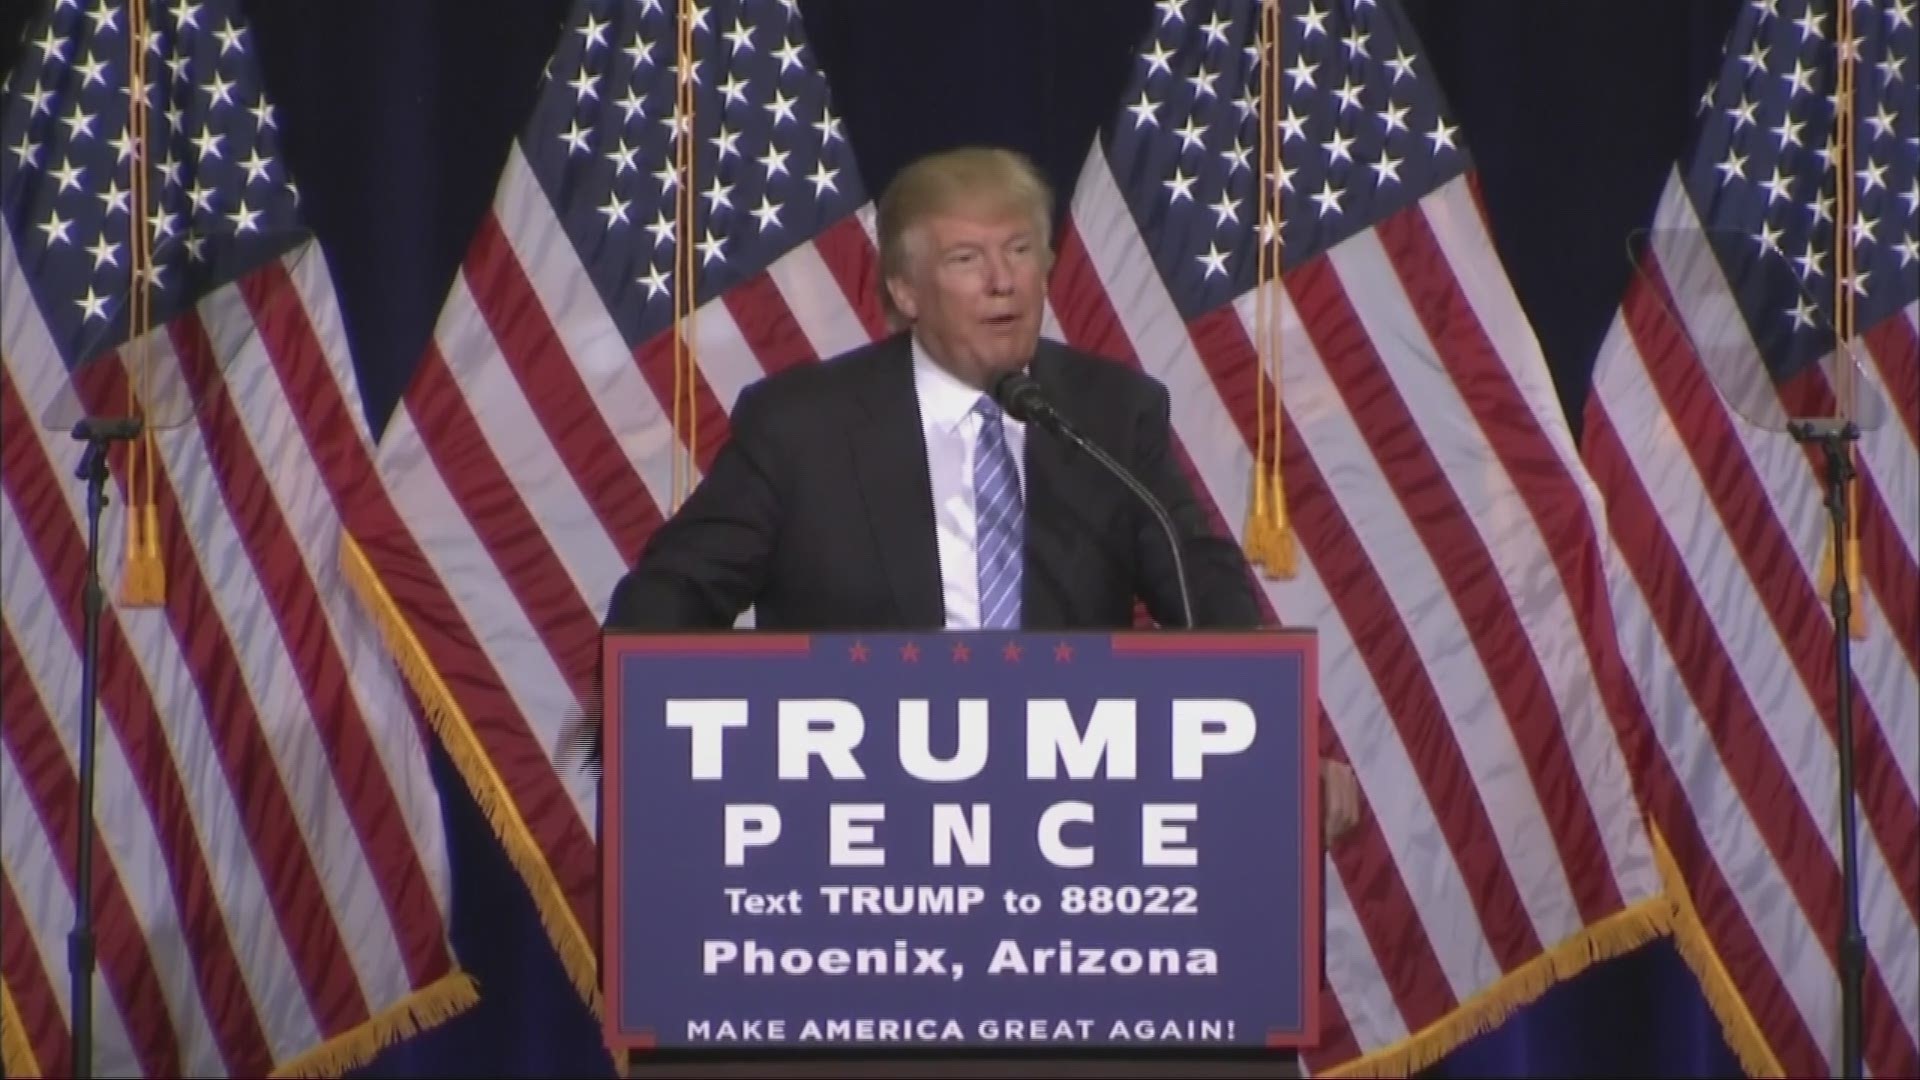 Donald Trump speaks on immigration in Arizona